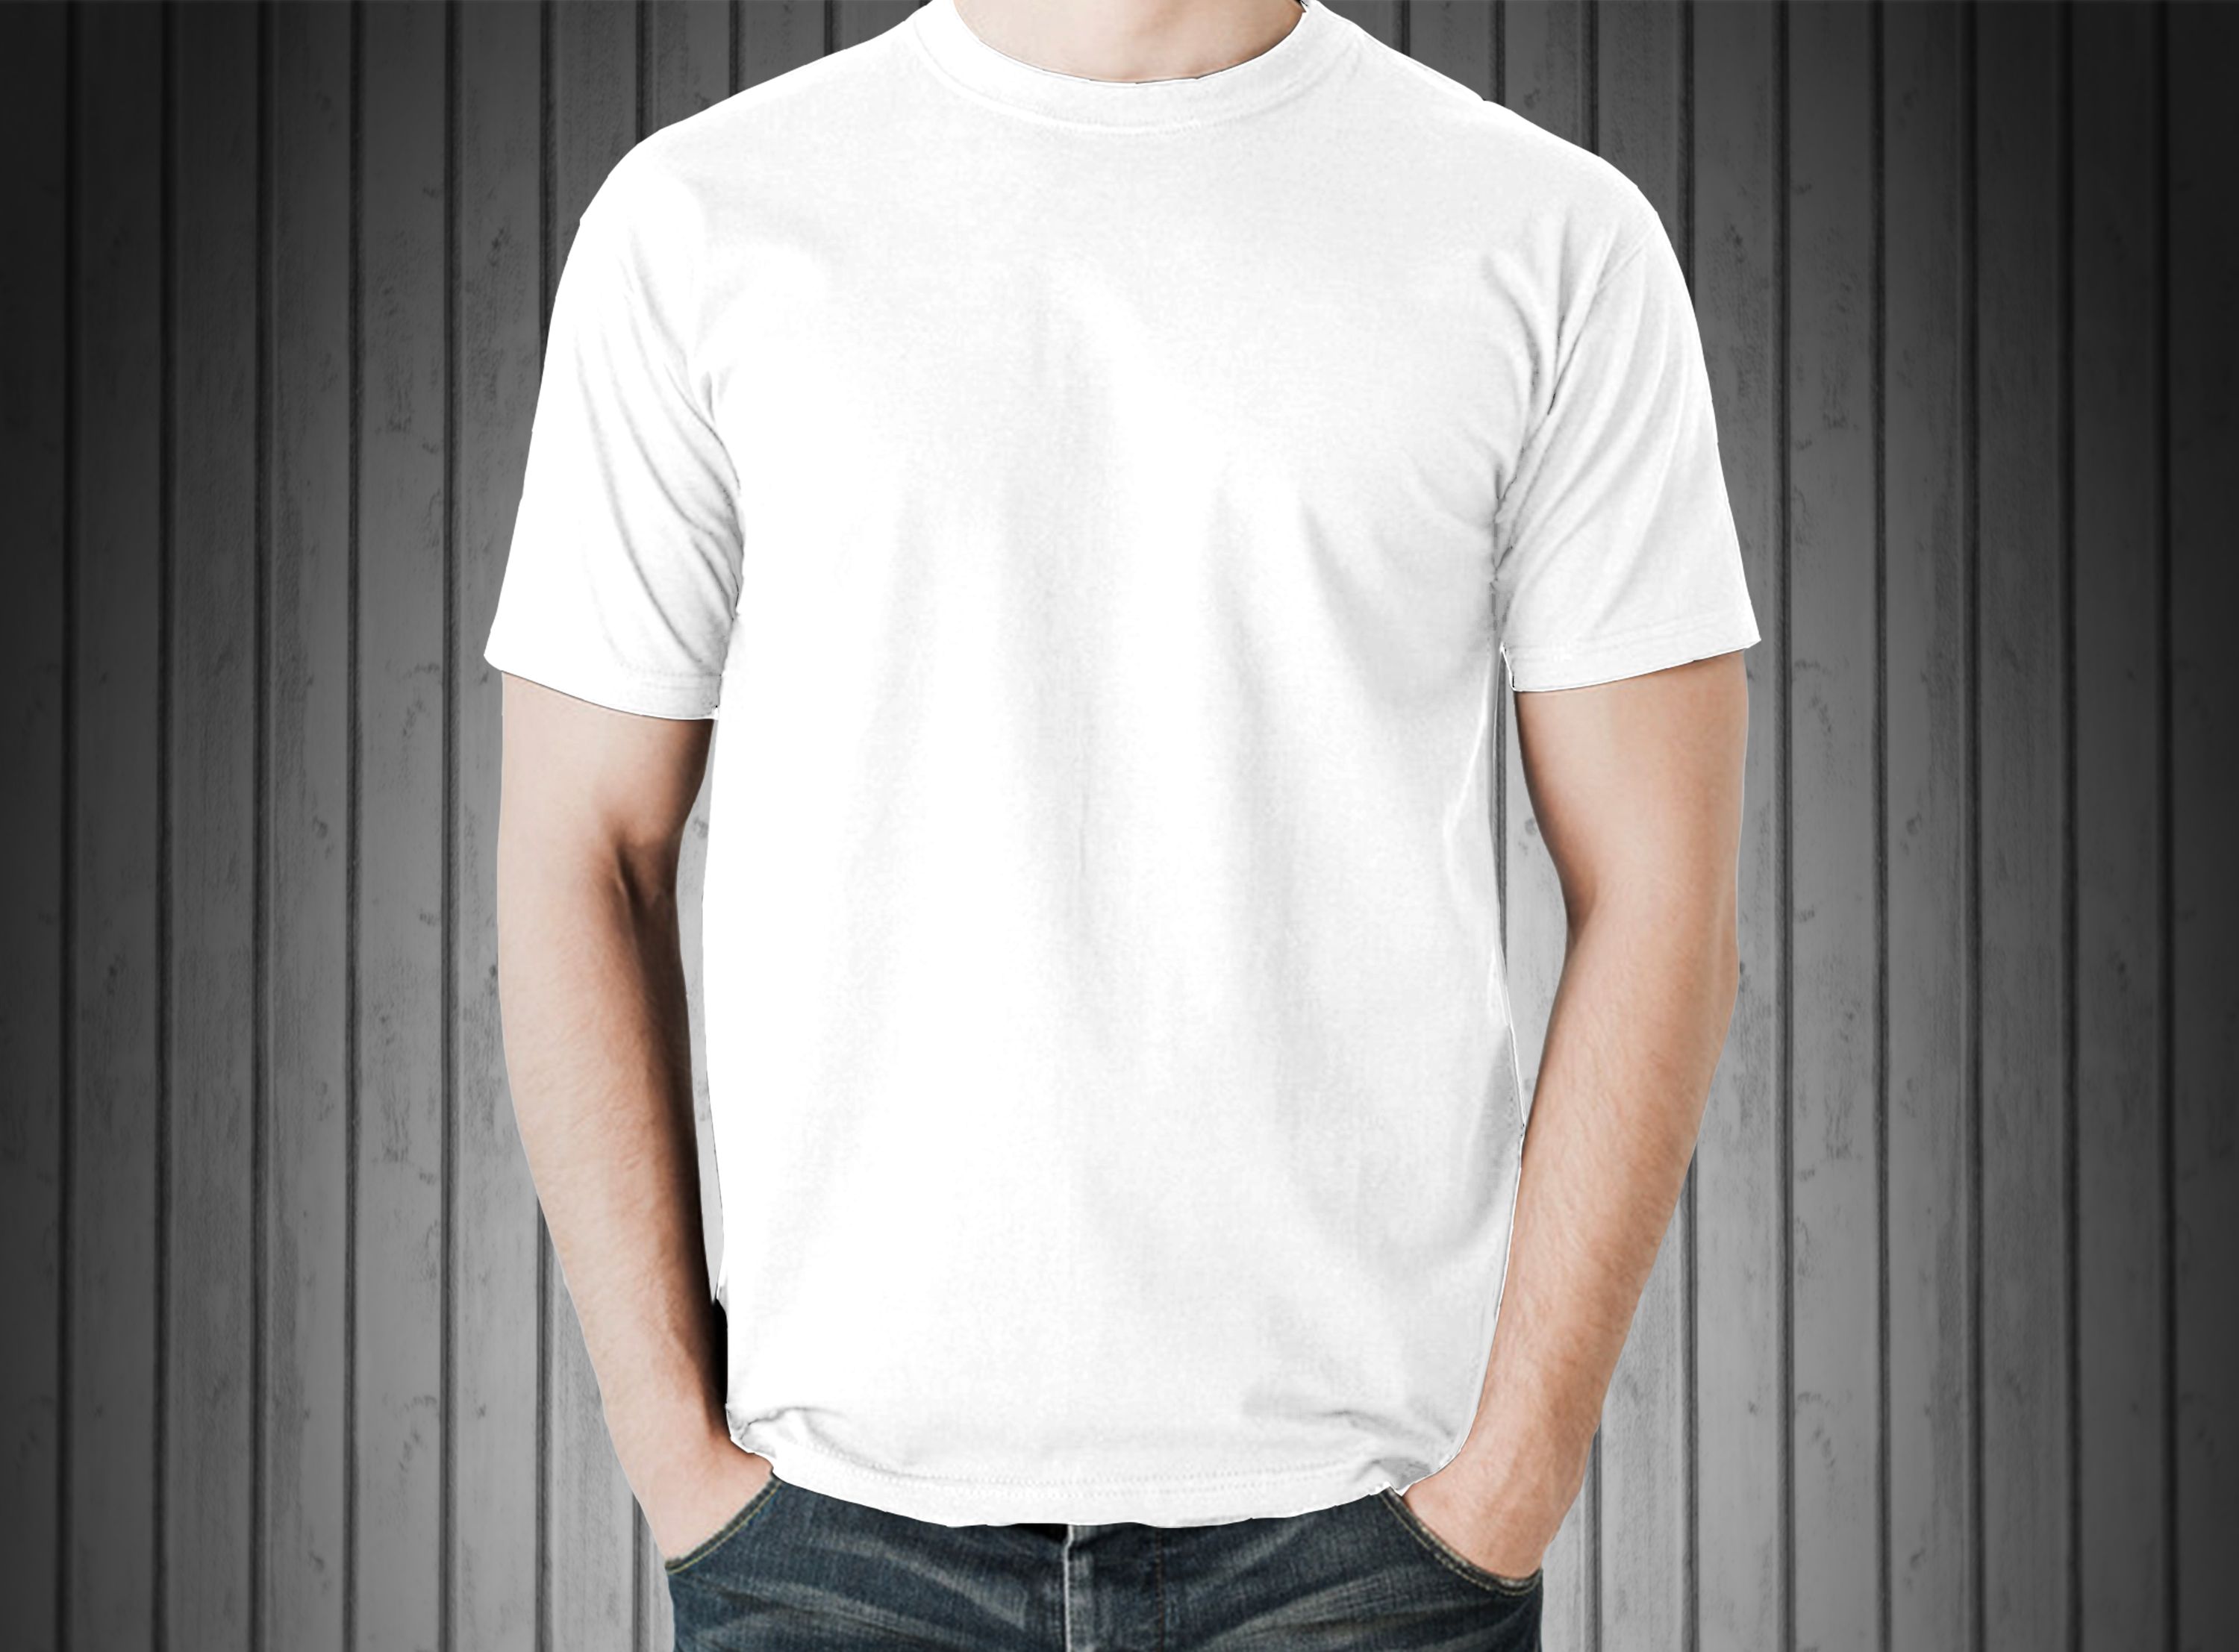 Белая футболка на человеке